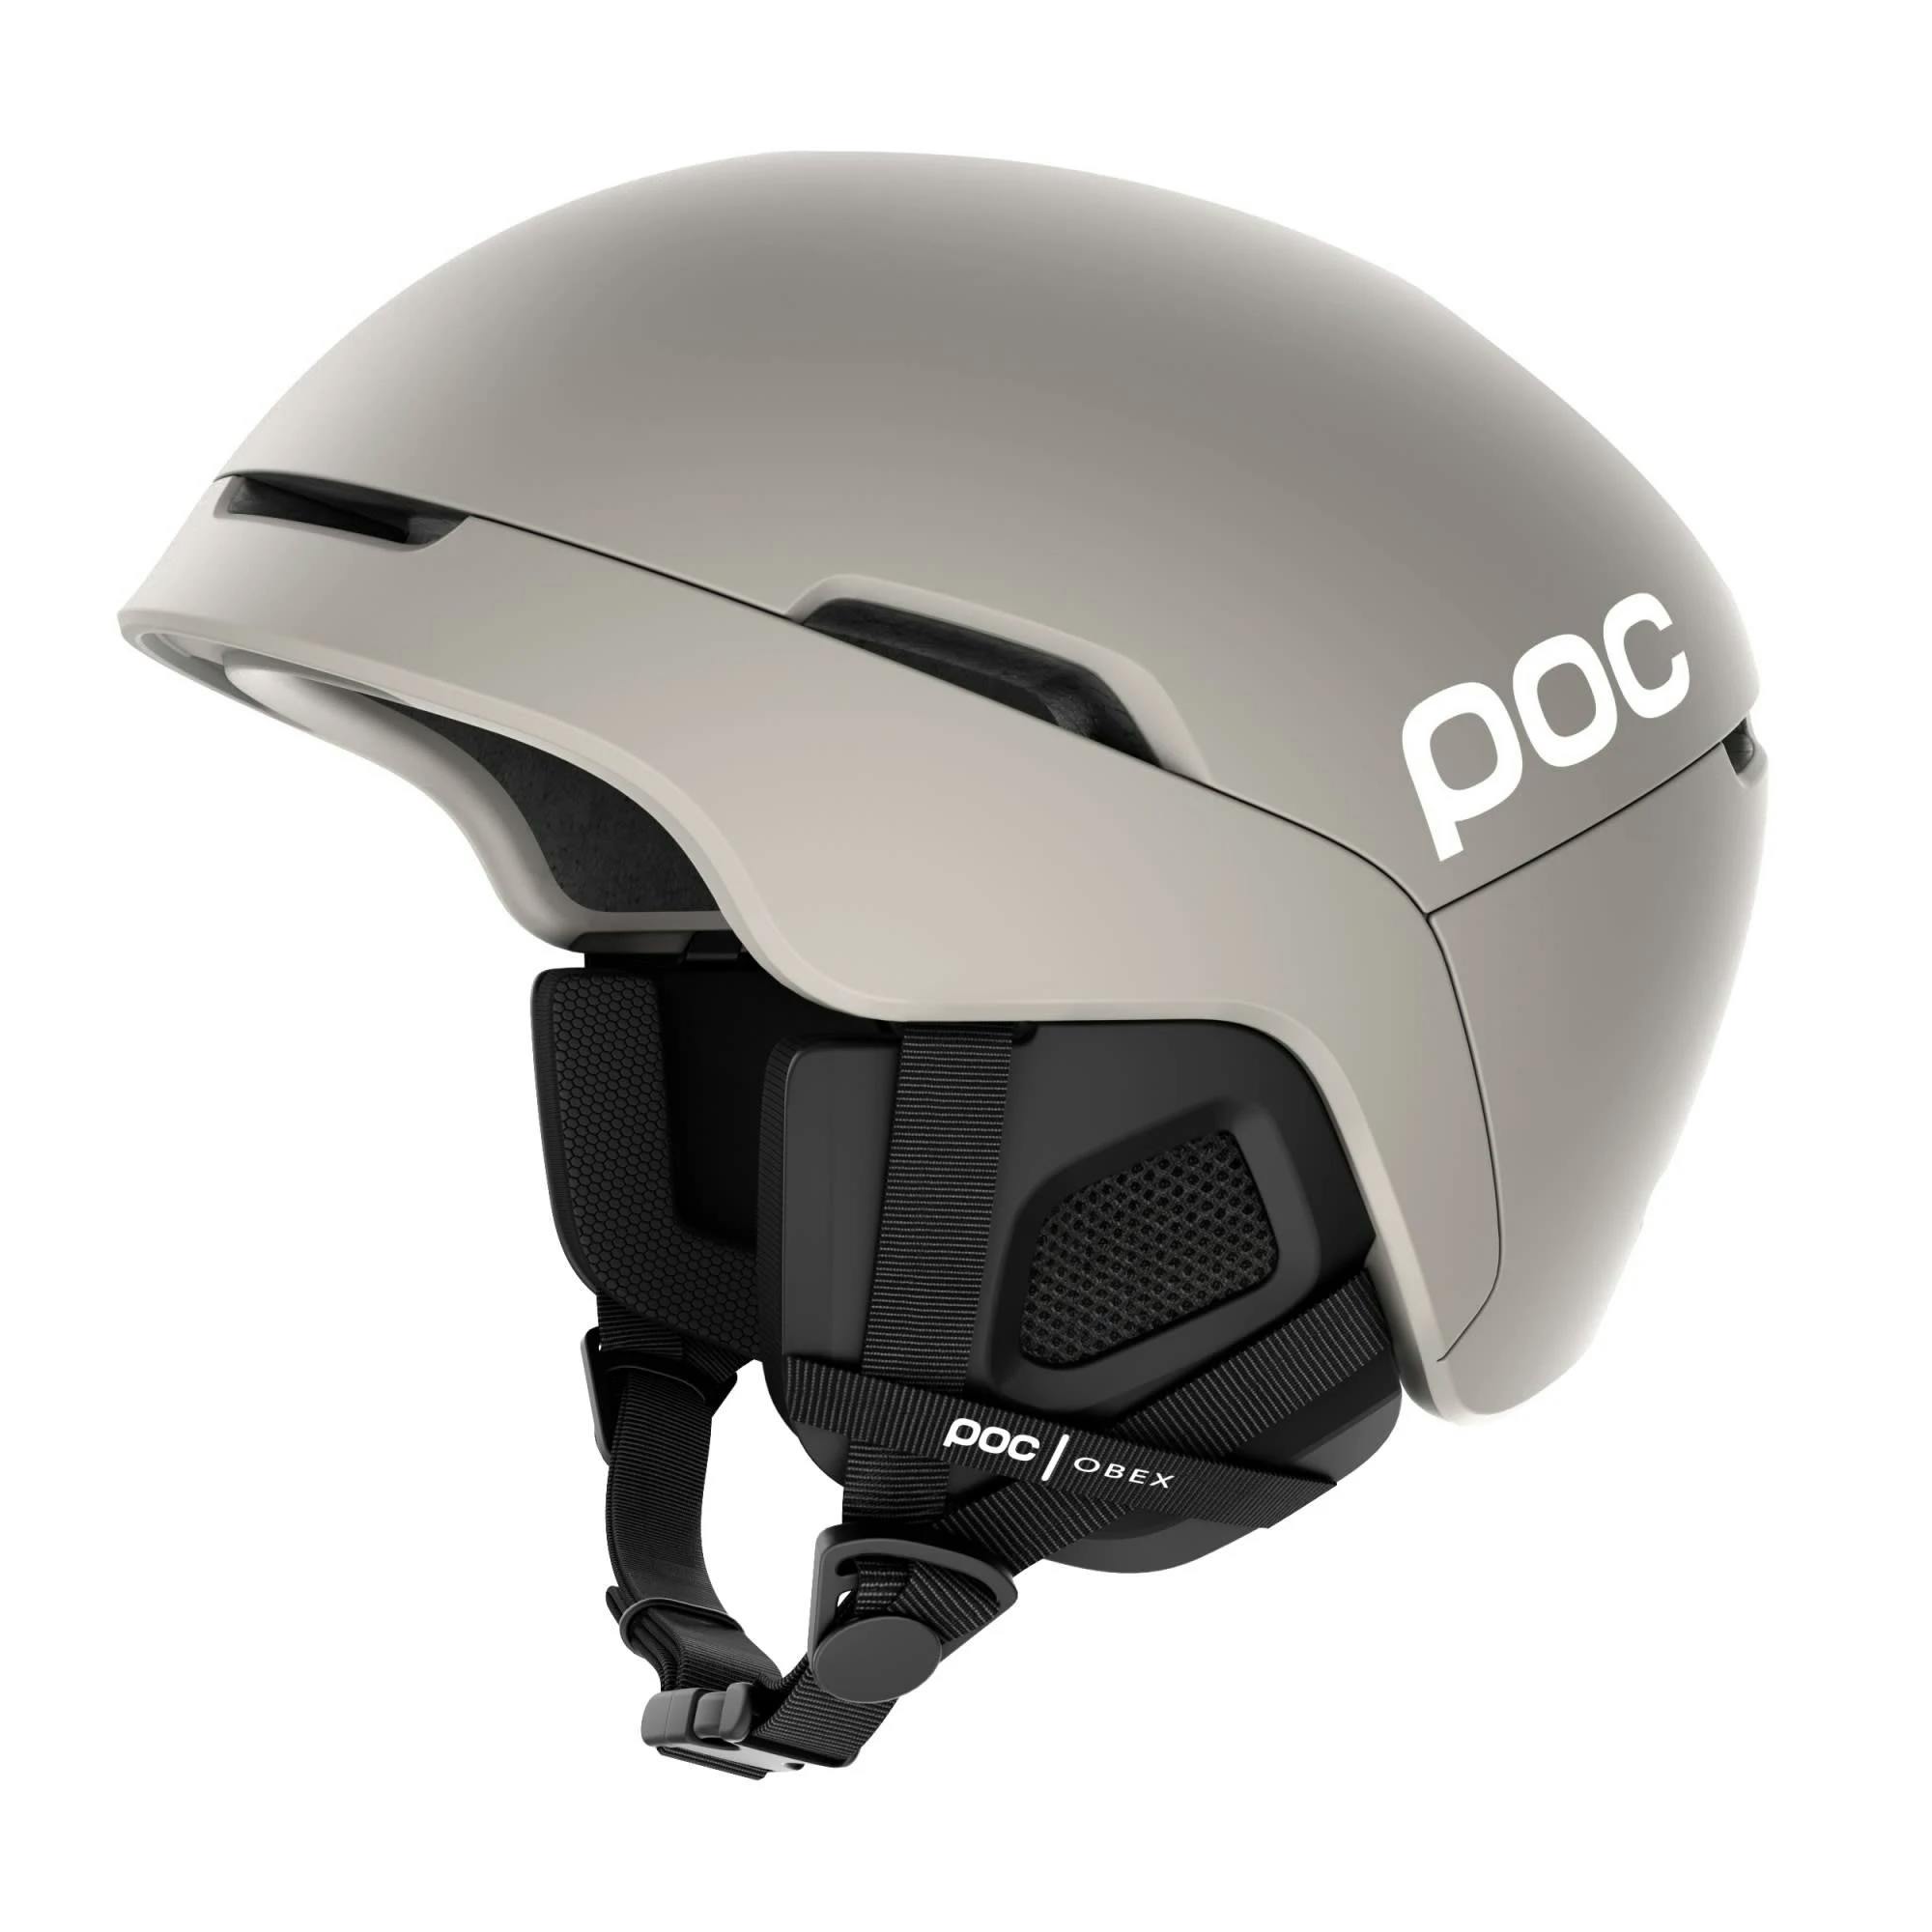 POC OBEX Spin Helmet